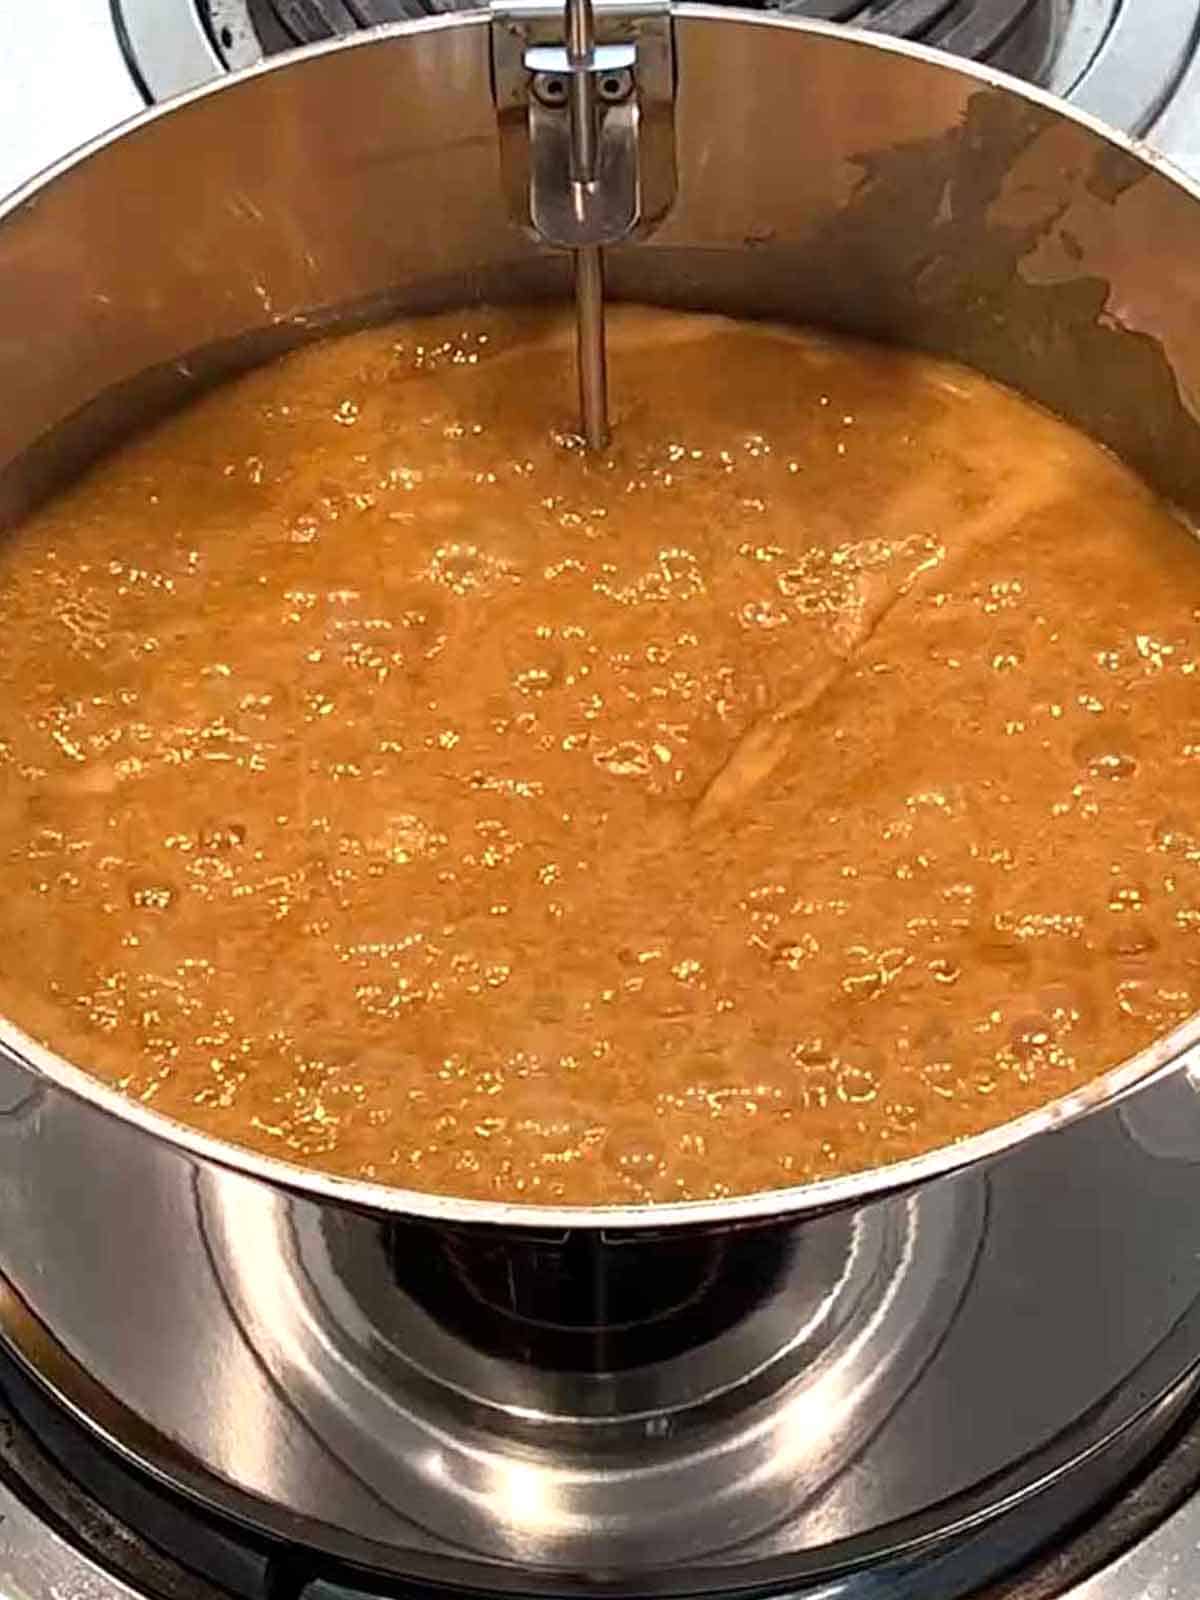 Praline mixture boiling in a saucepan.